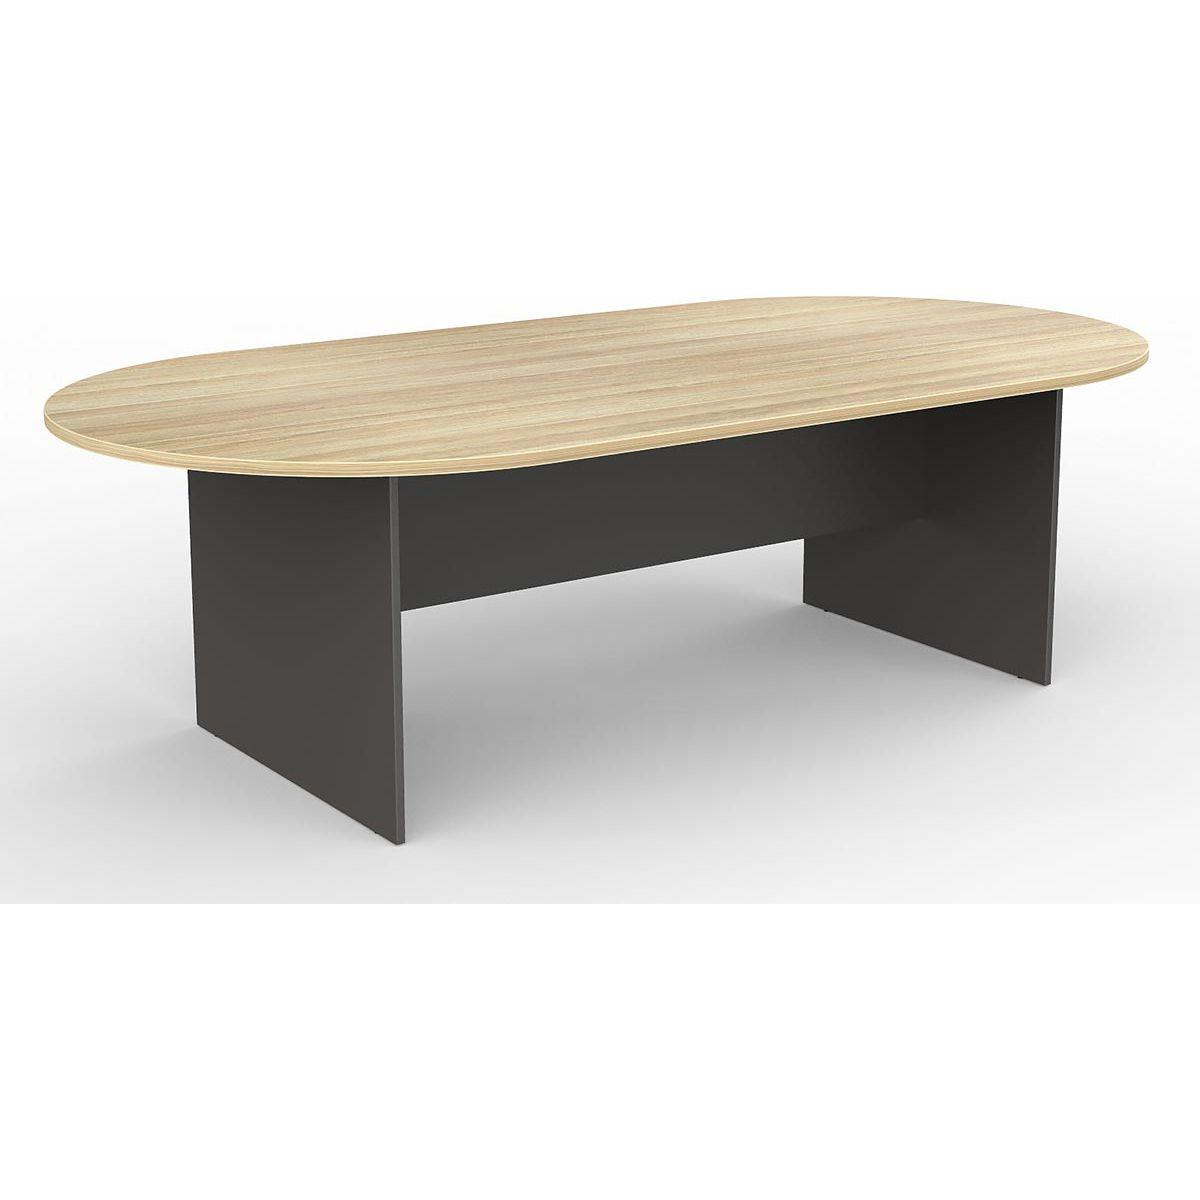 EkoSystem Boardroom Table - Office Furniture Company 